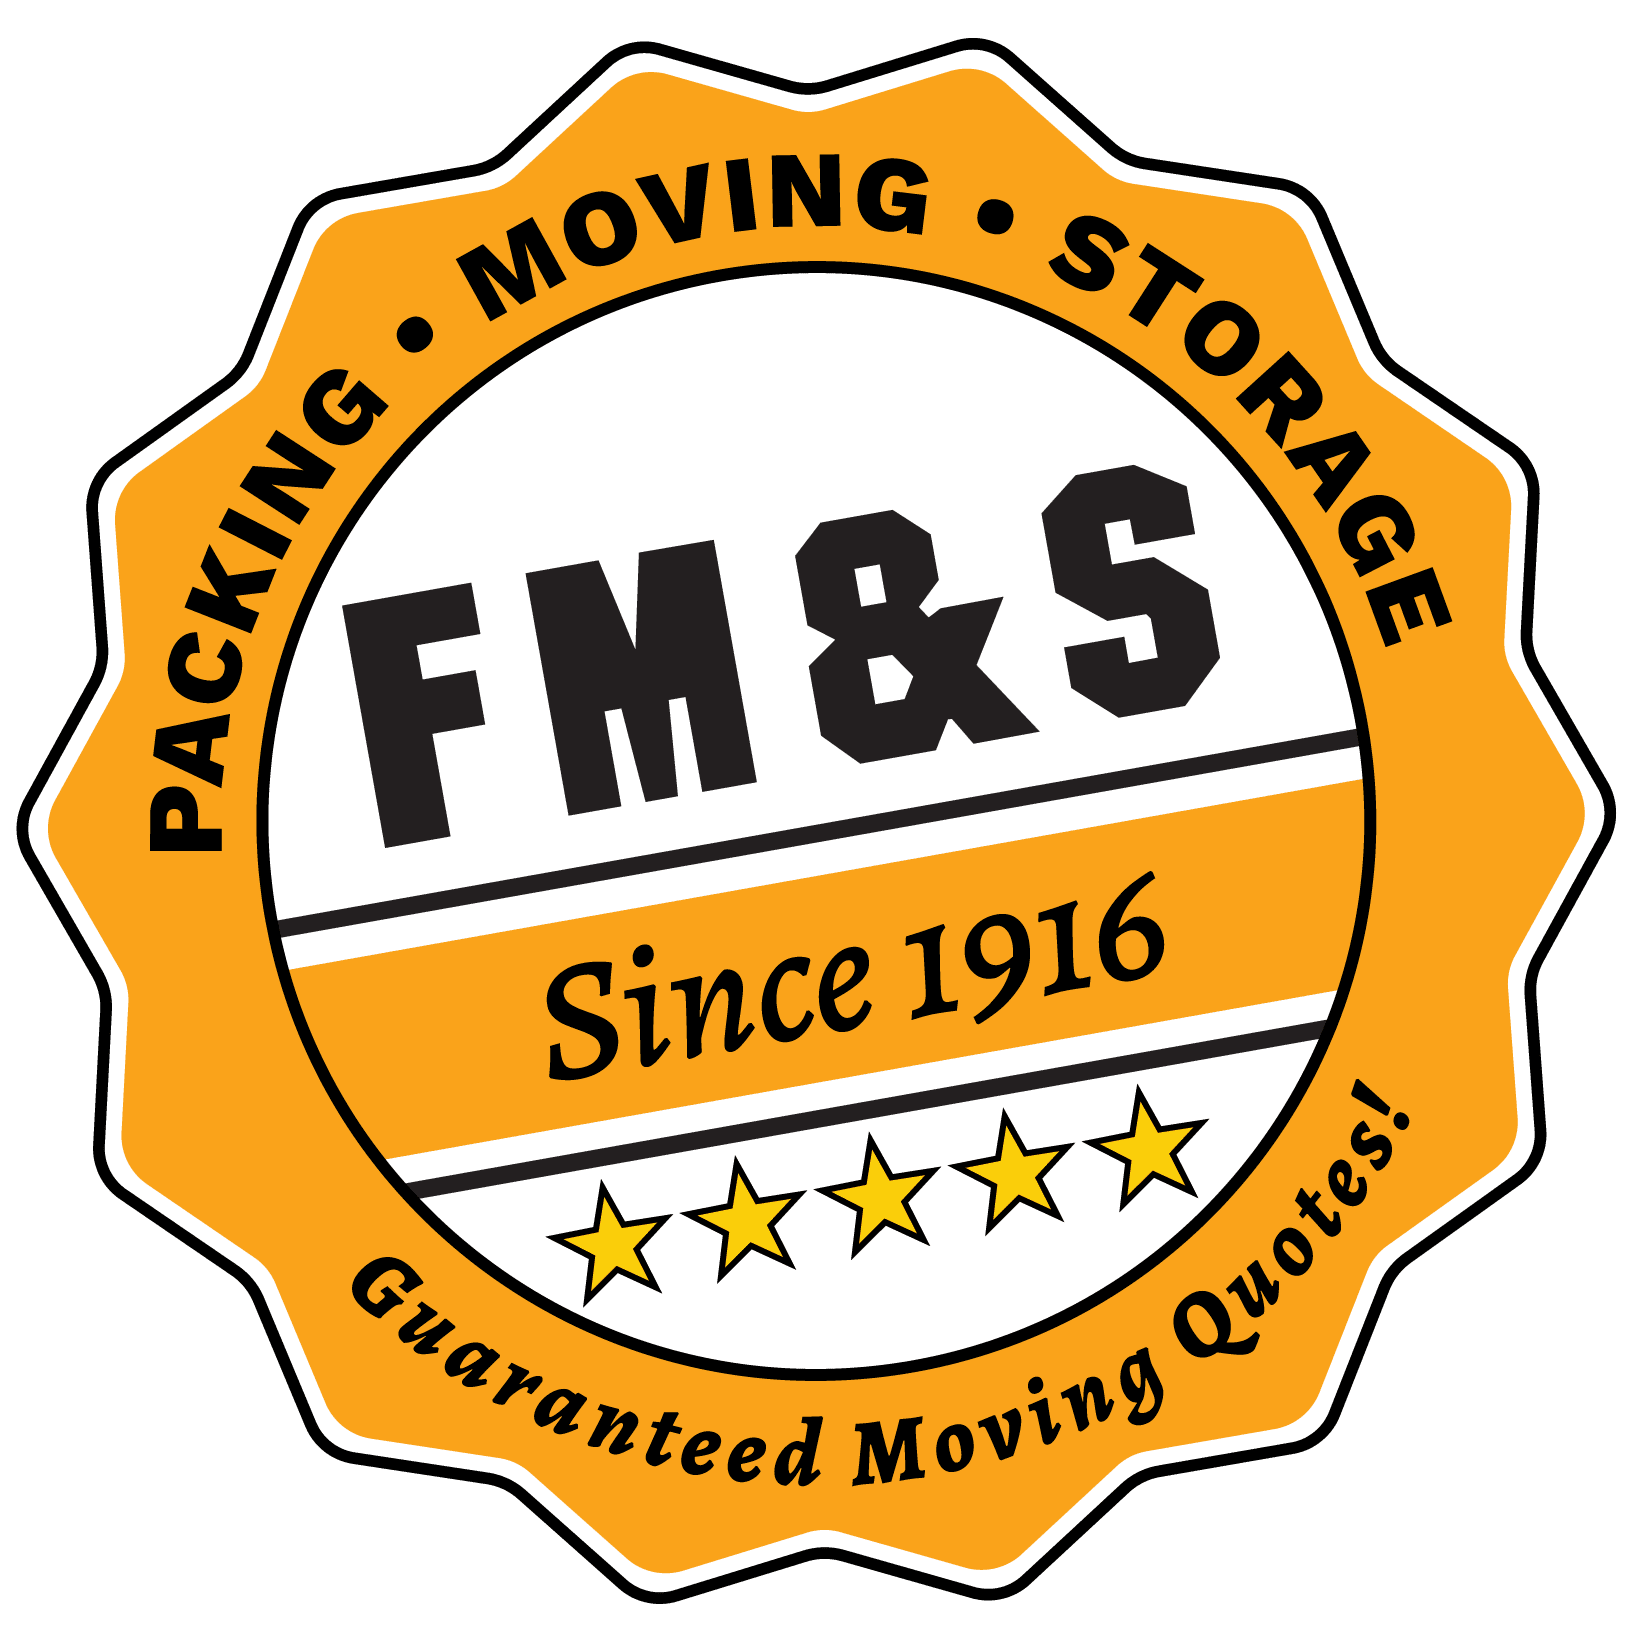 Ferguson Moving & Storage - Since 1916